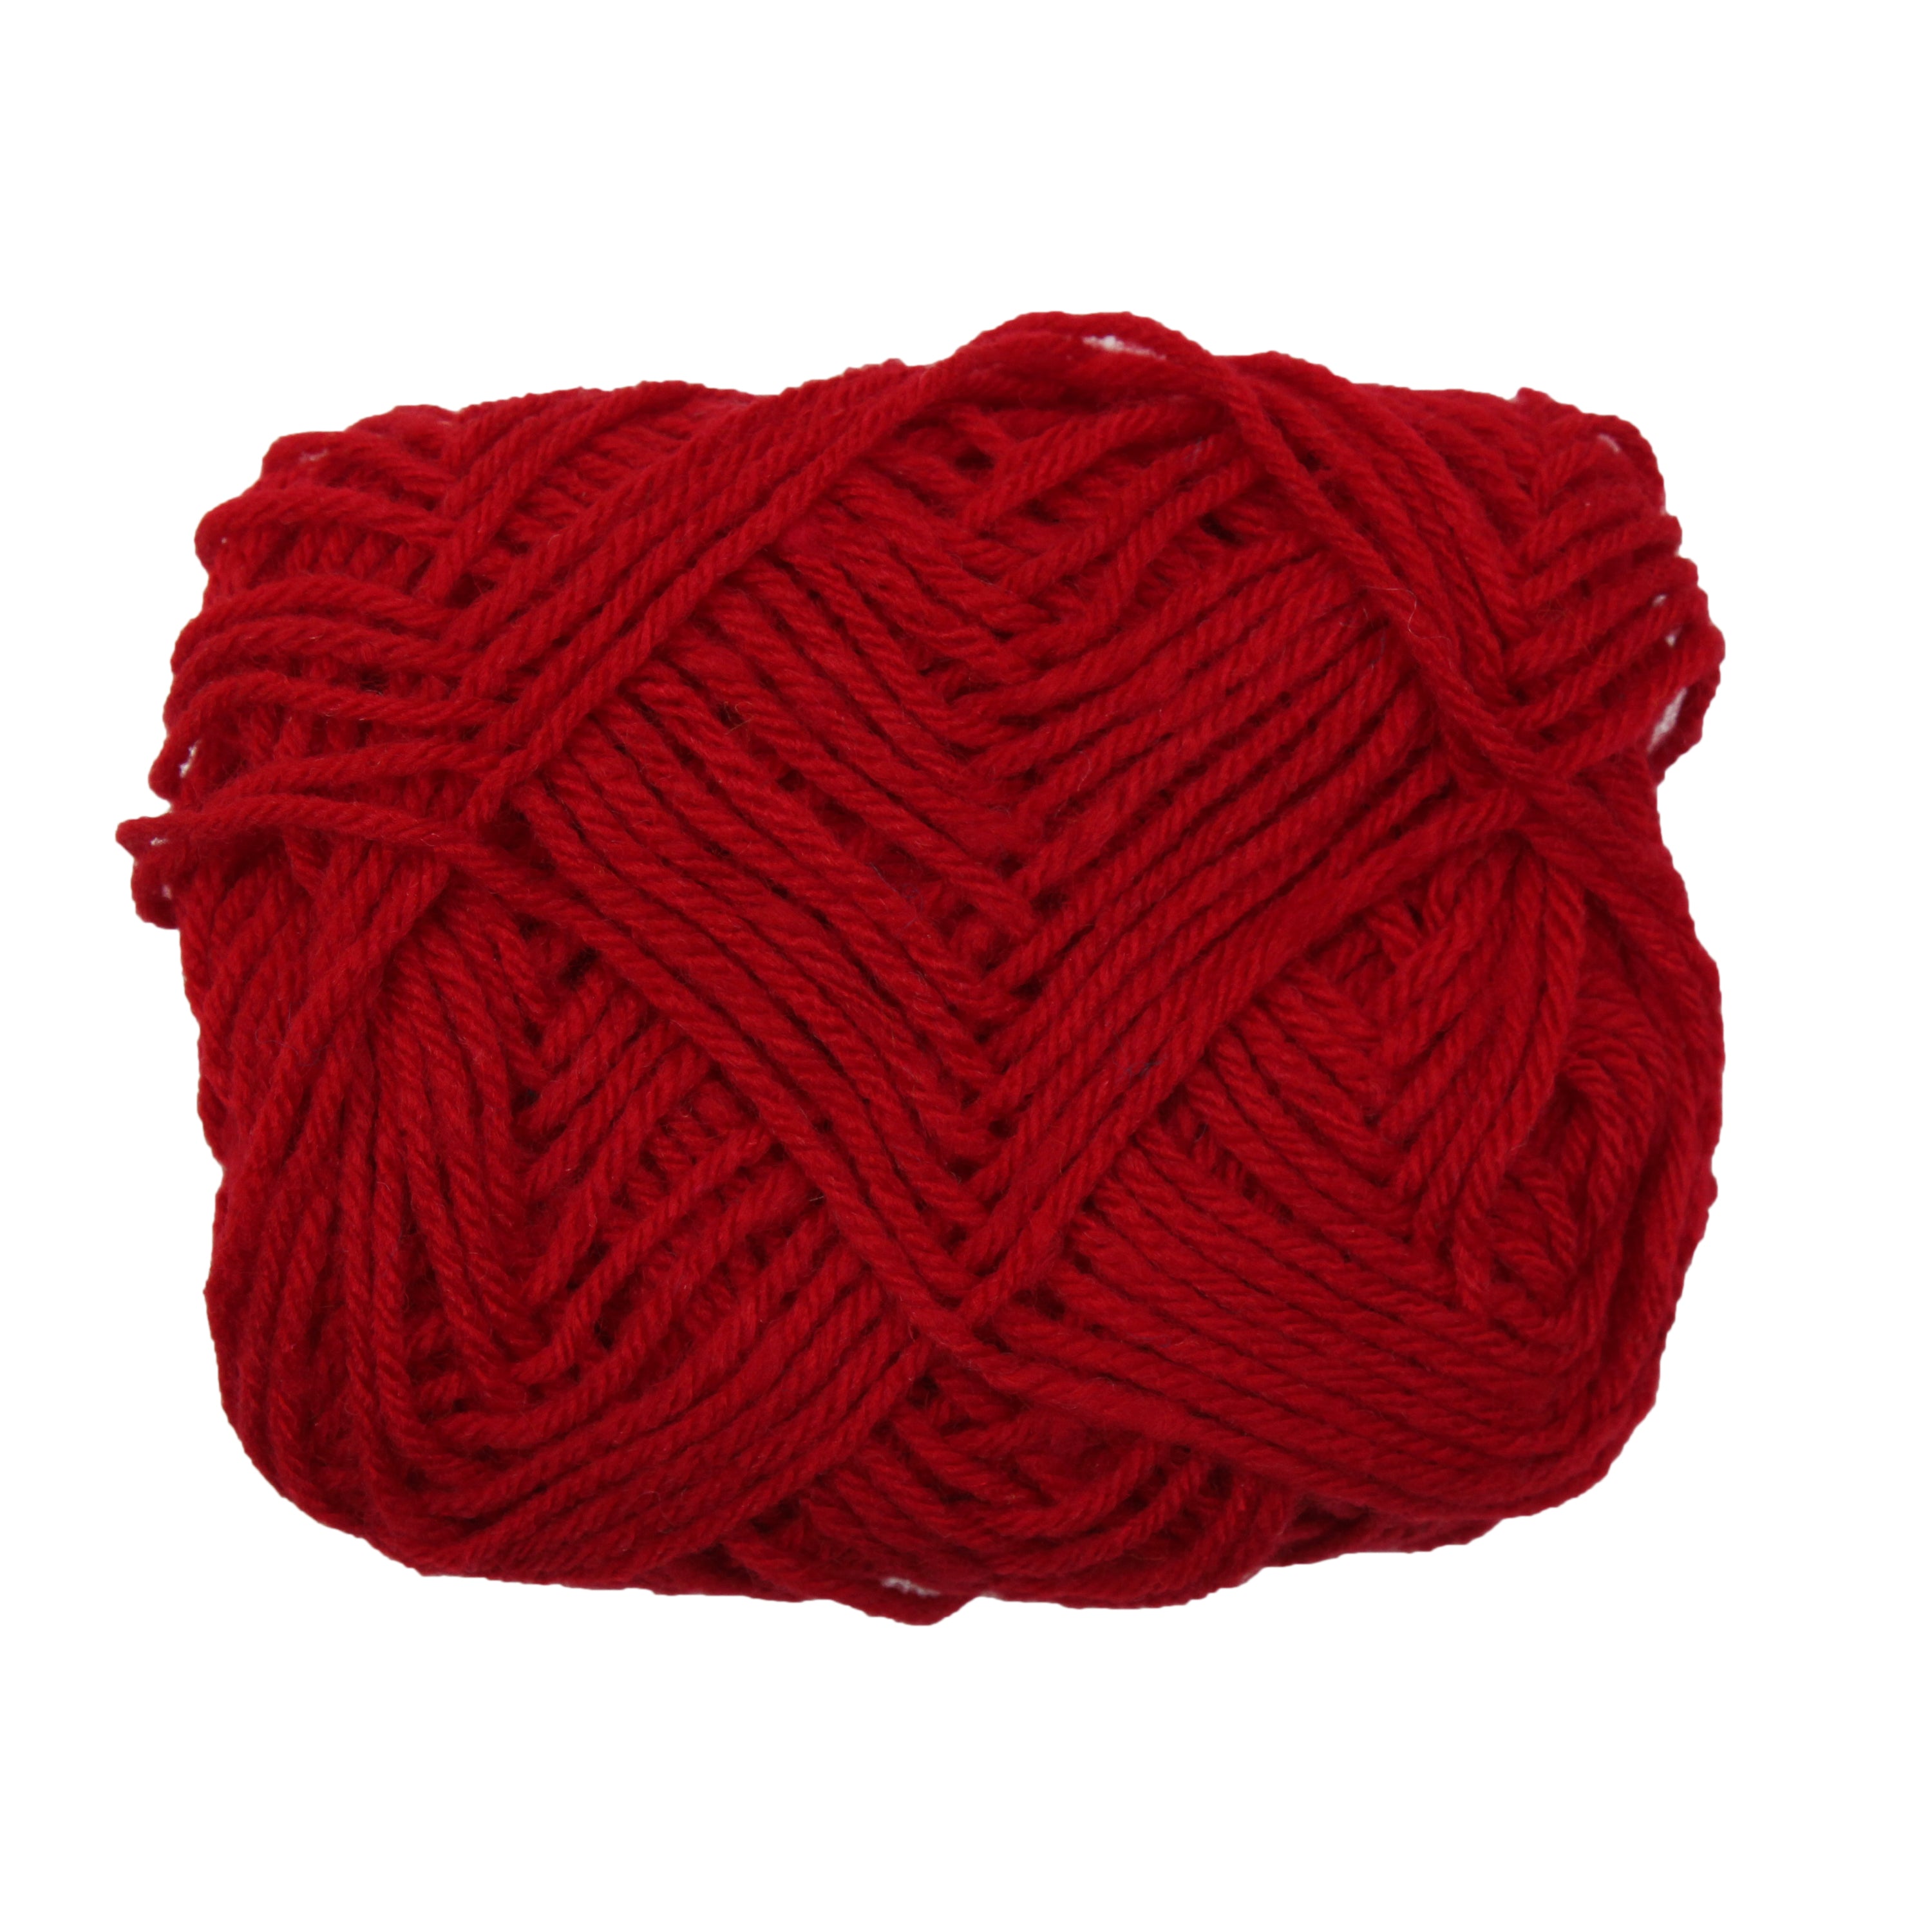 Itsy Bitsy Woollen Yarn 12 gm - Indian Red